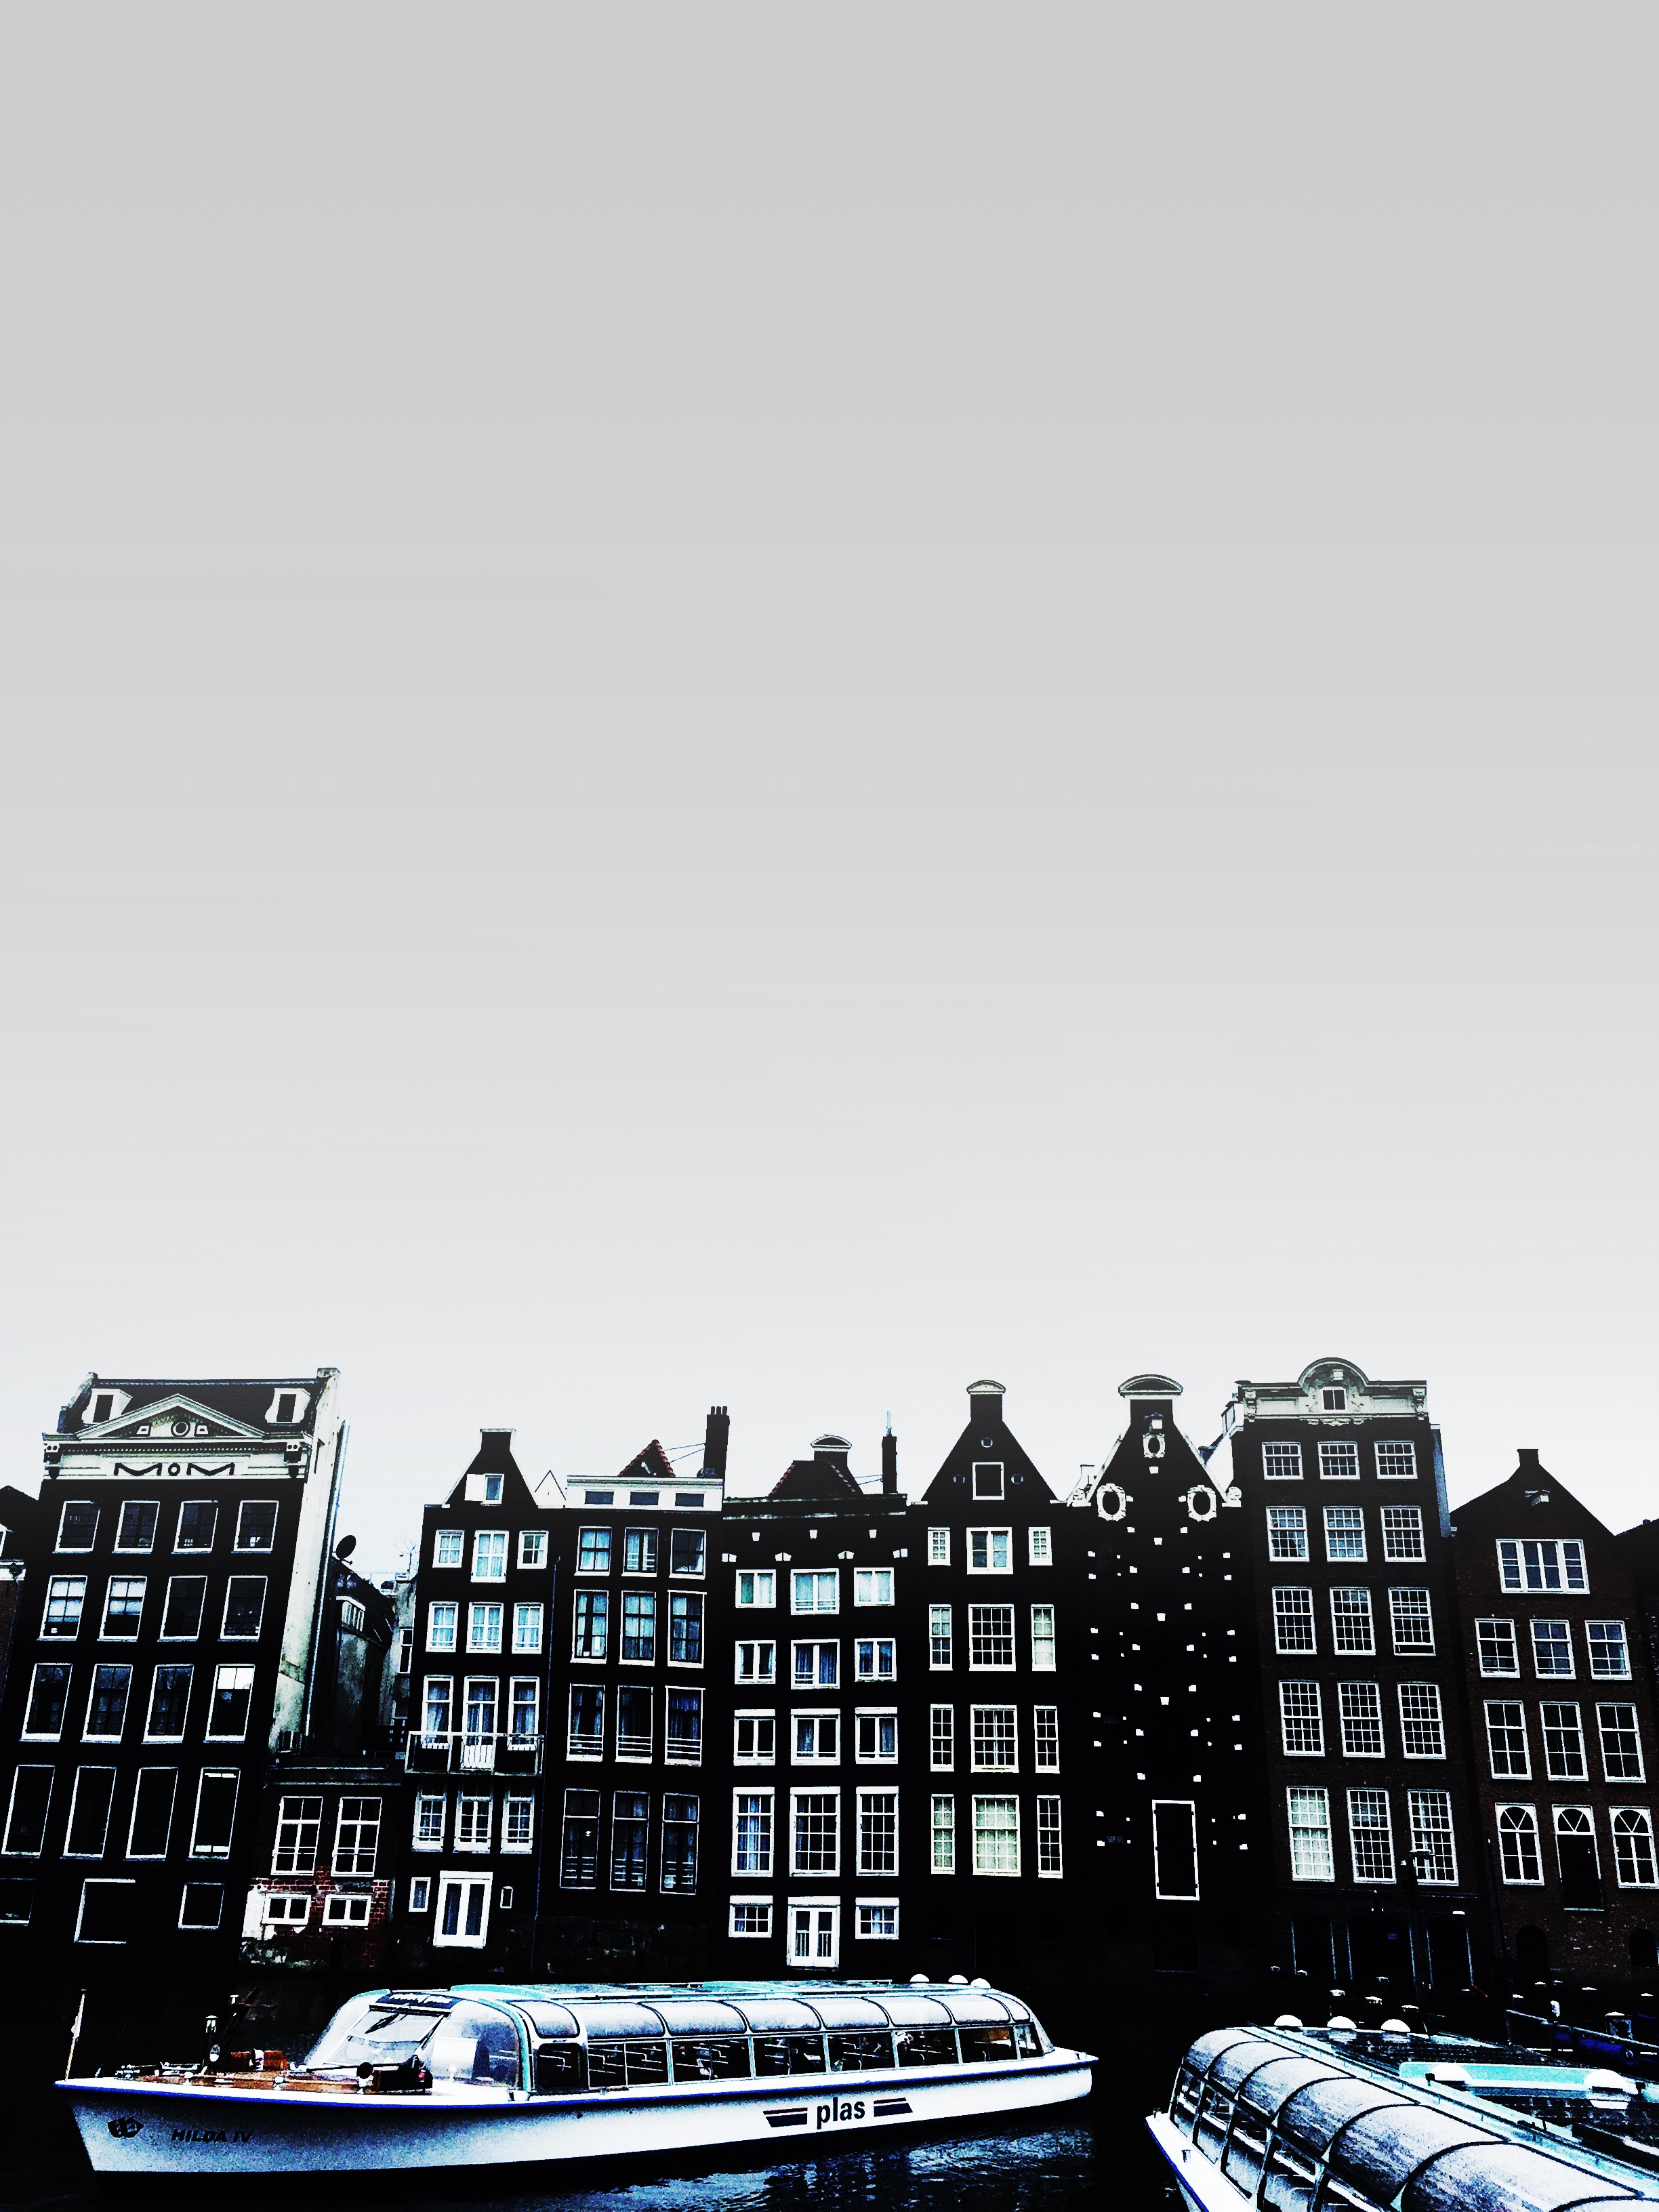 #ostockdamhagen16 Part 2: Amsterdam